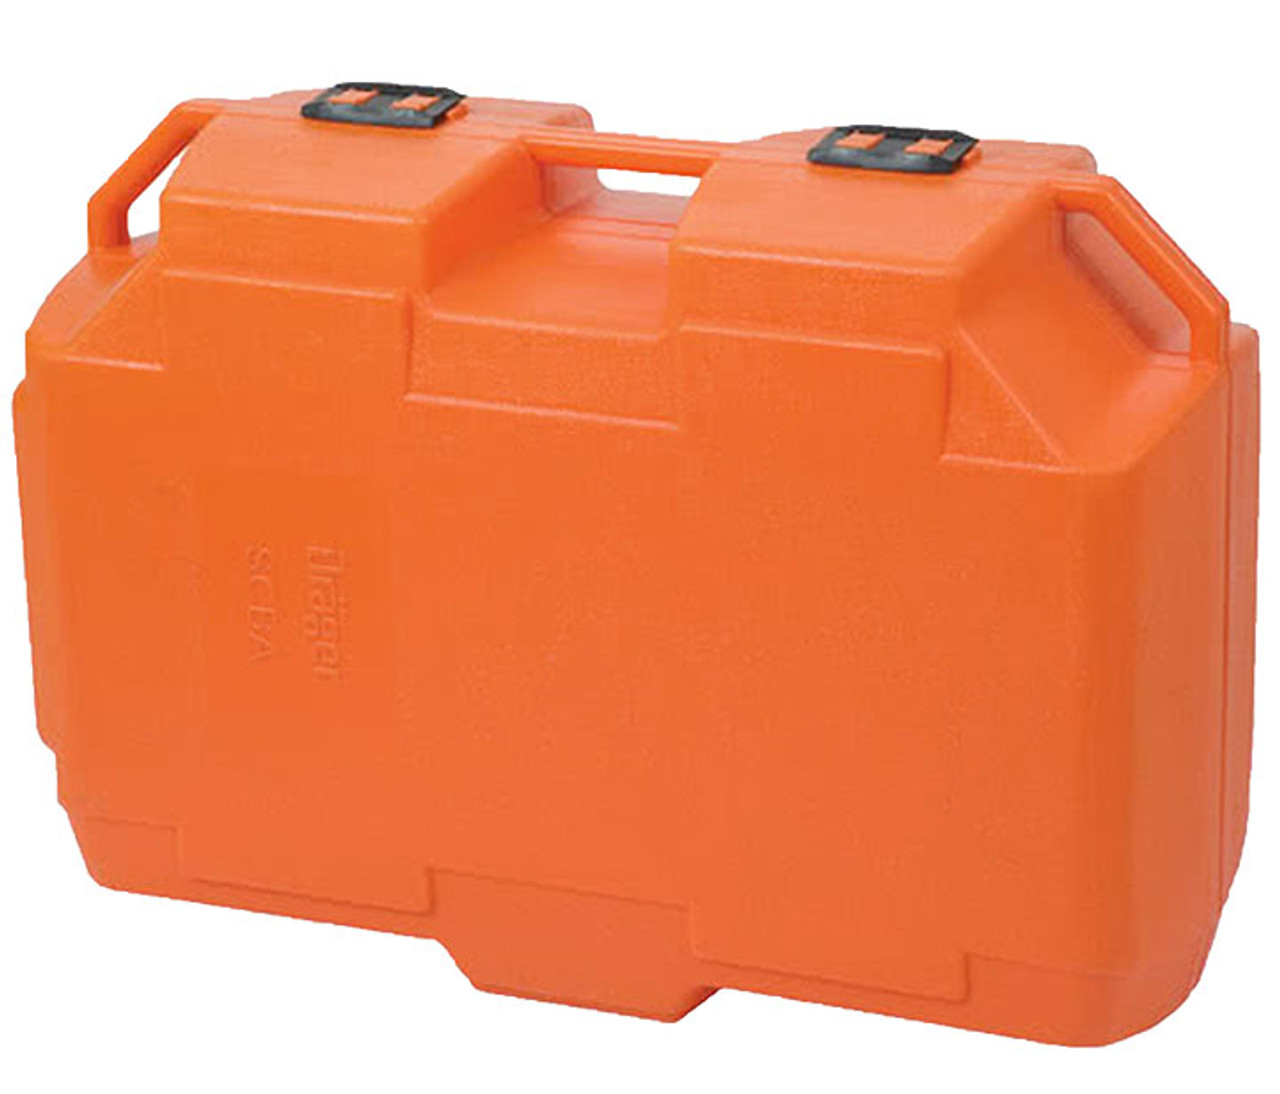 Dräger SCBA Rigid Orange Storage Case